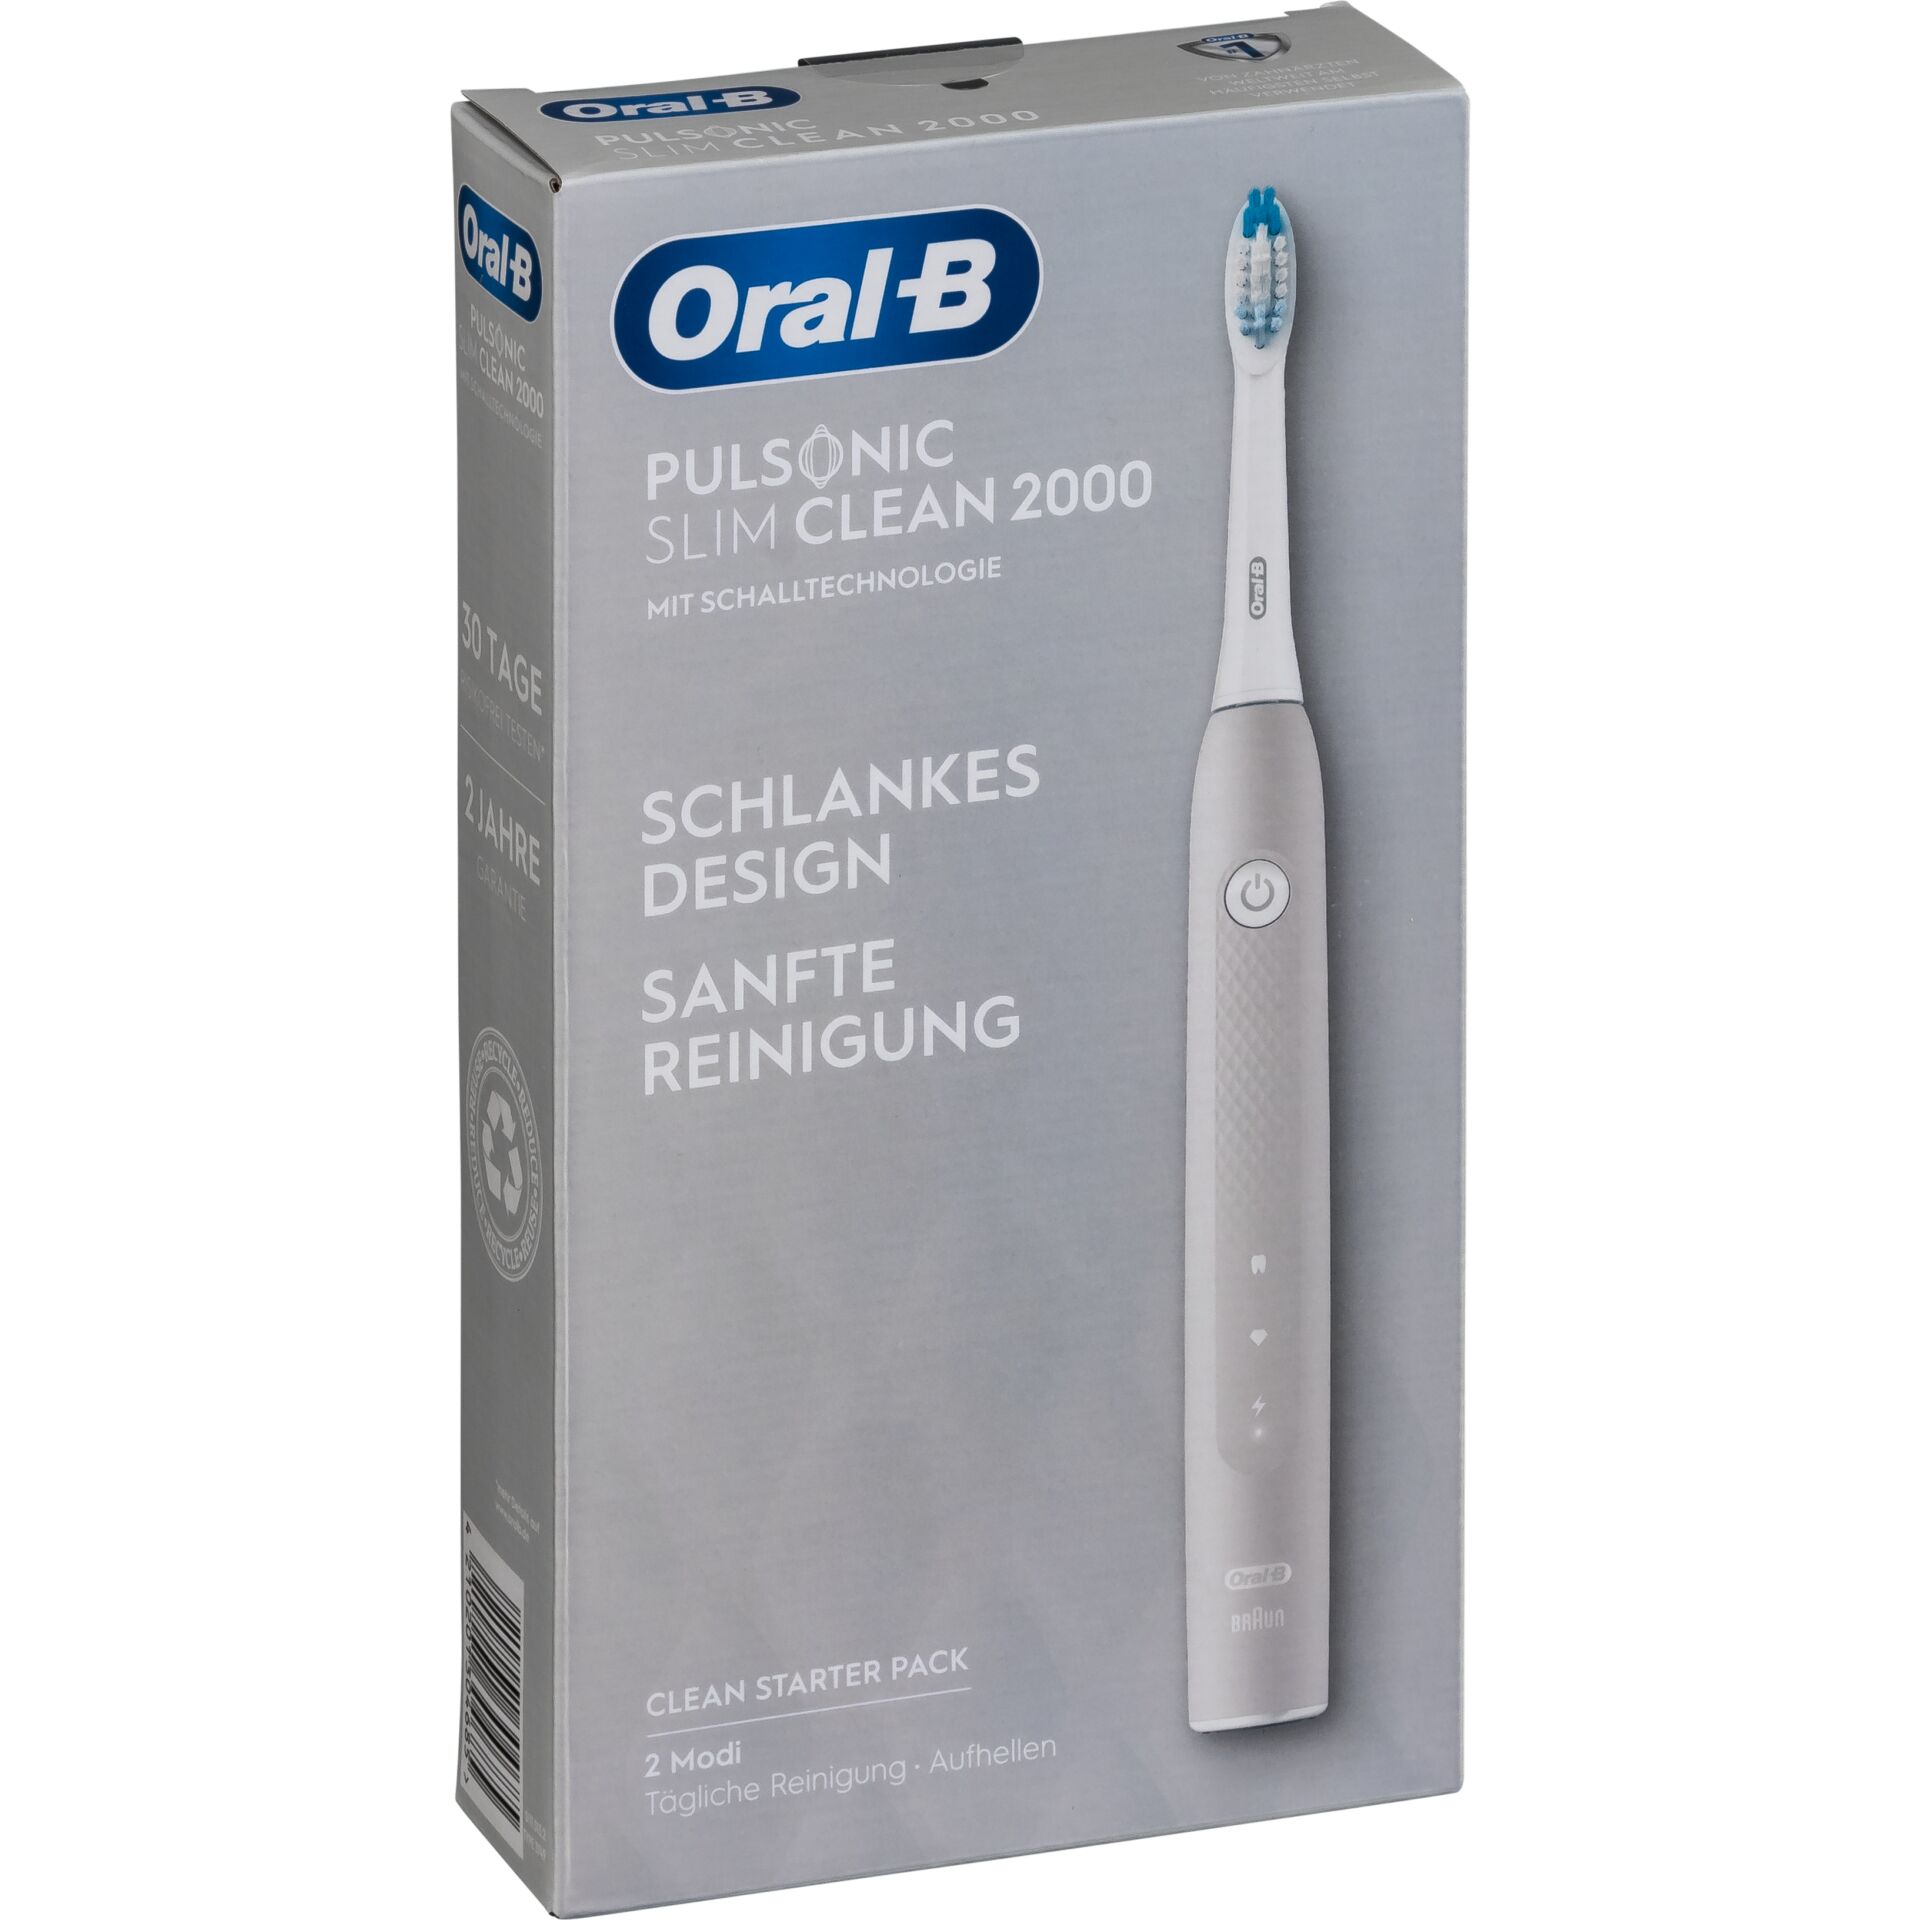 Oral-B Pulsonic Slim Clean 2000 grigio